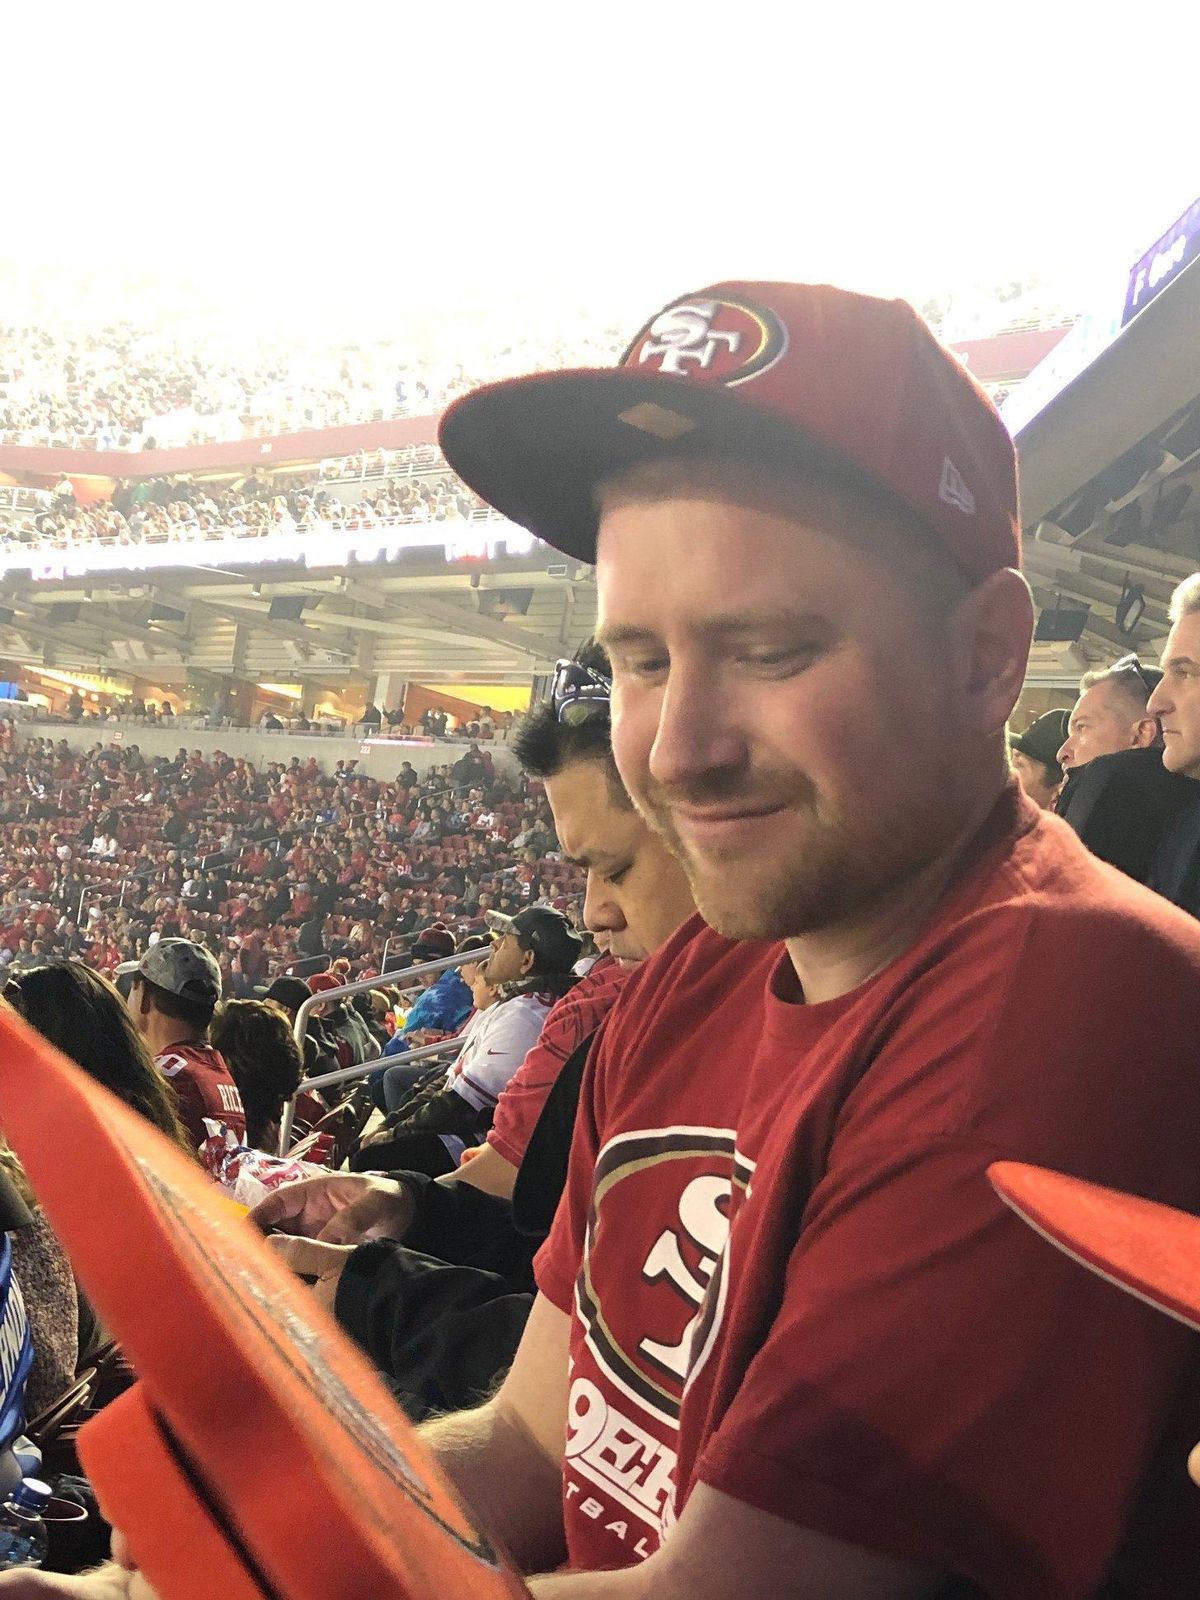 Ian Powers, 32, of Spokane went missing the evening of Monday, Nov. 15, 2018 after a San Francisco 49ers football game in Santa Clara, California. (Santa Clara Police Department / Courtesy photo)